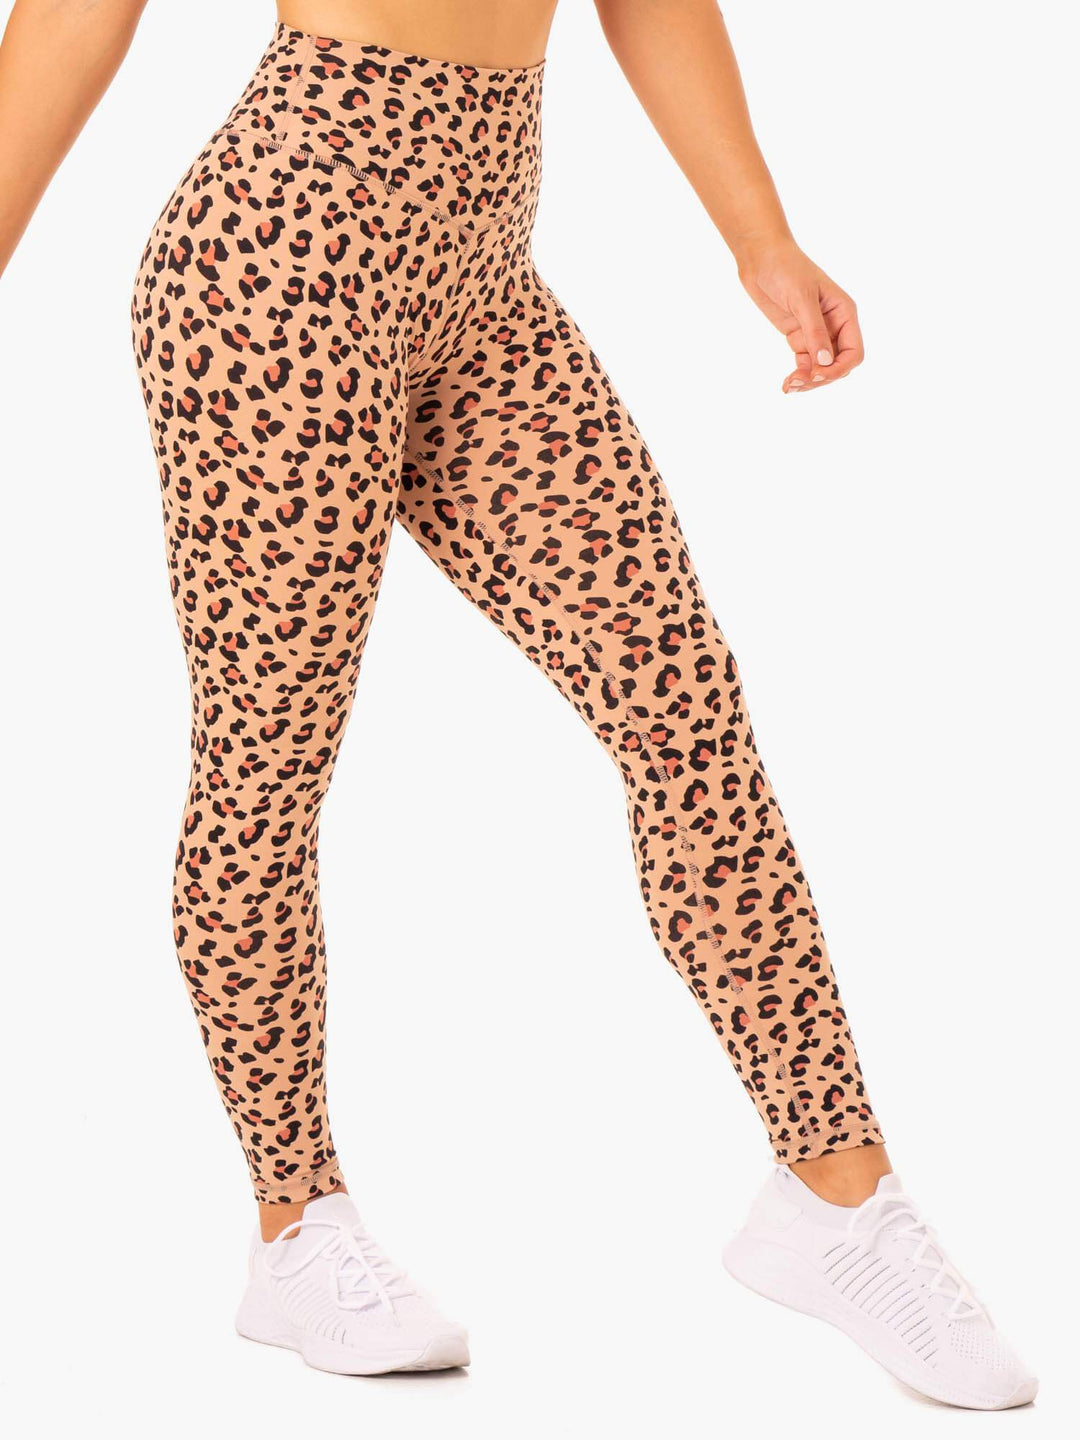 Hybrid Full Length Gym Leggings - Tan Leopard Clothing Ryderwear 